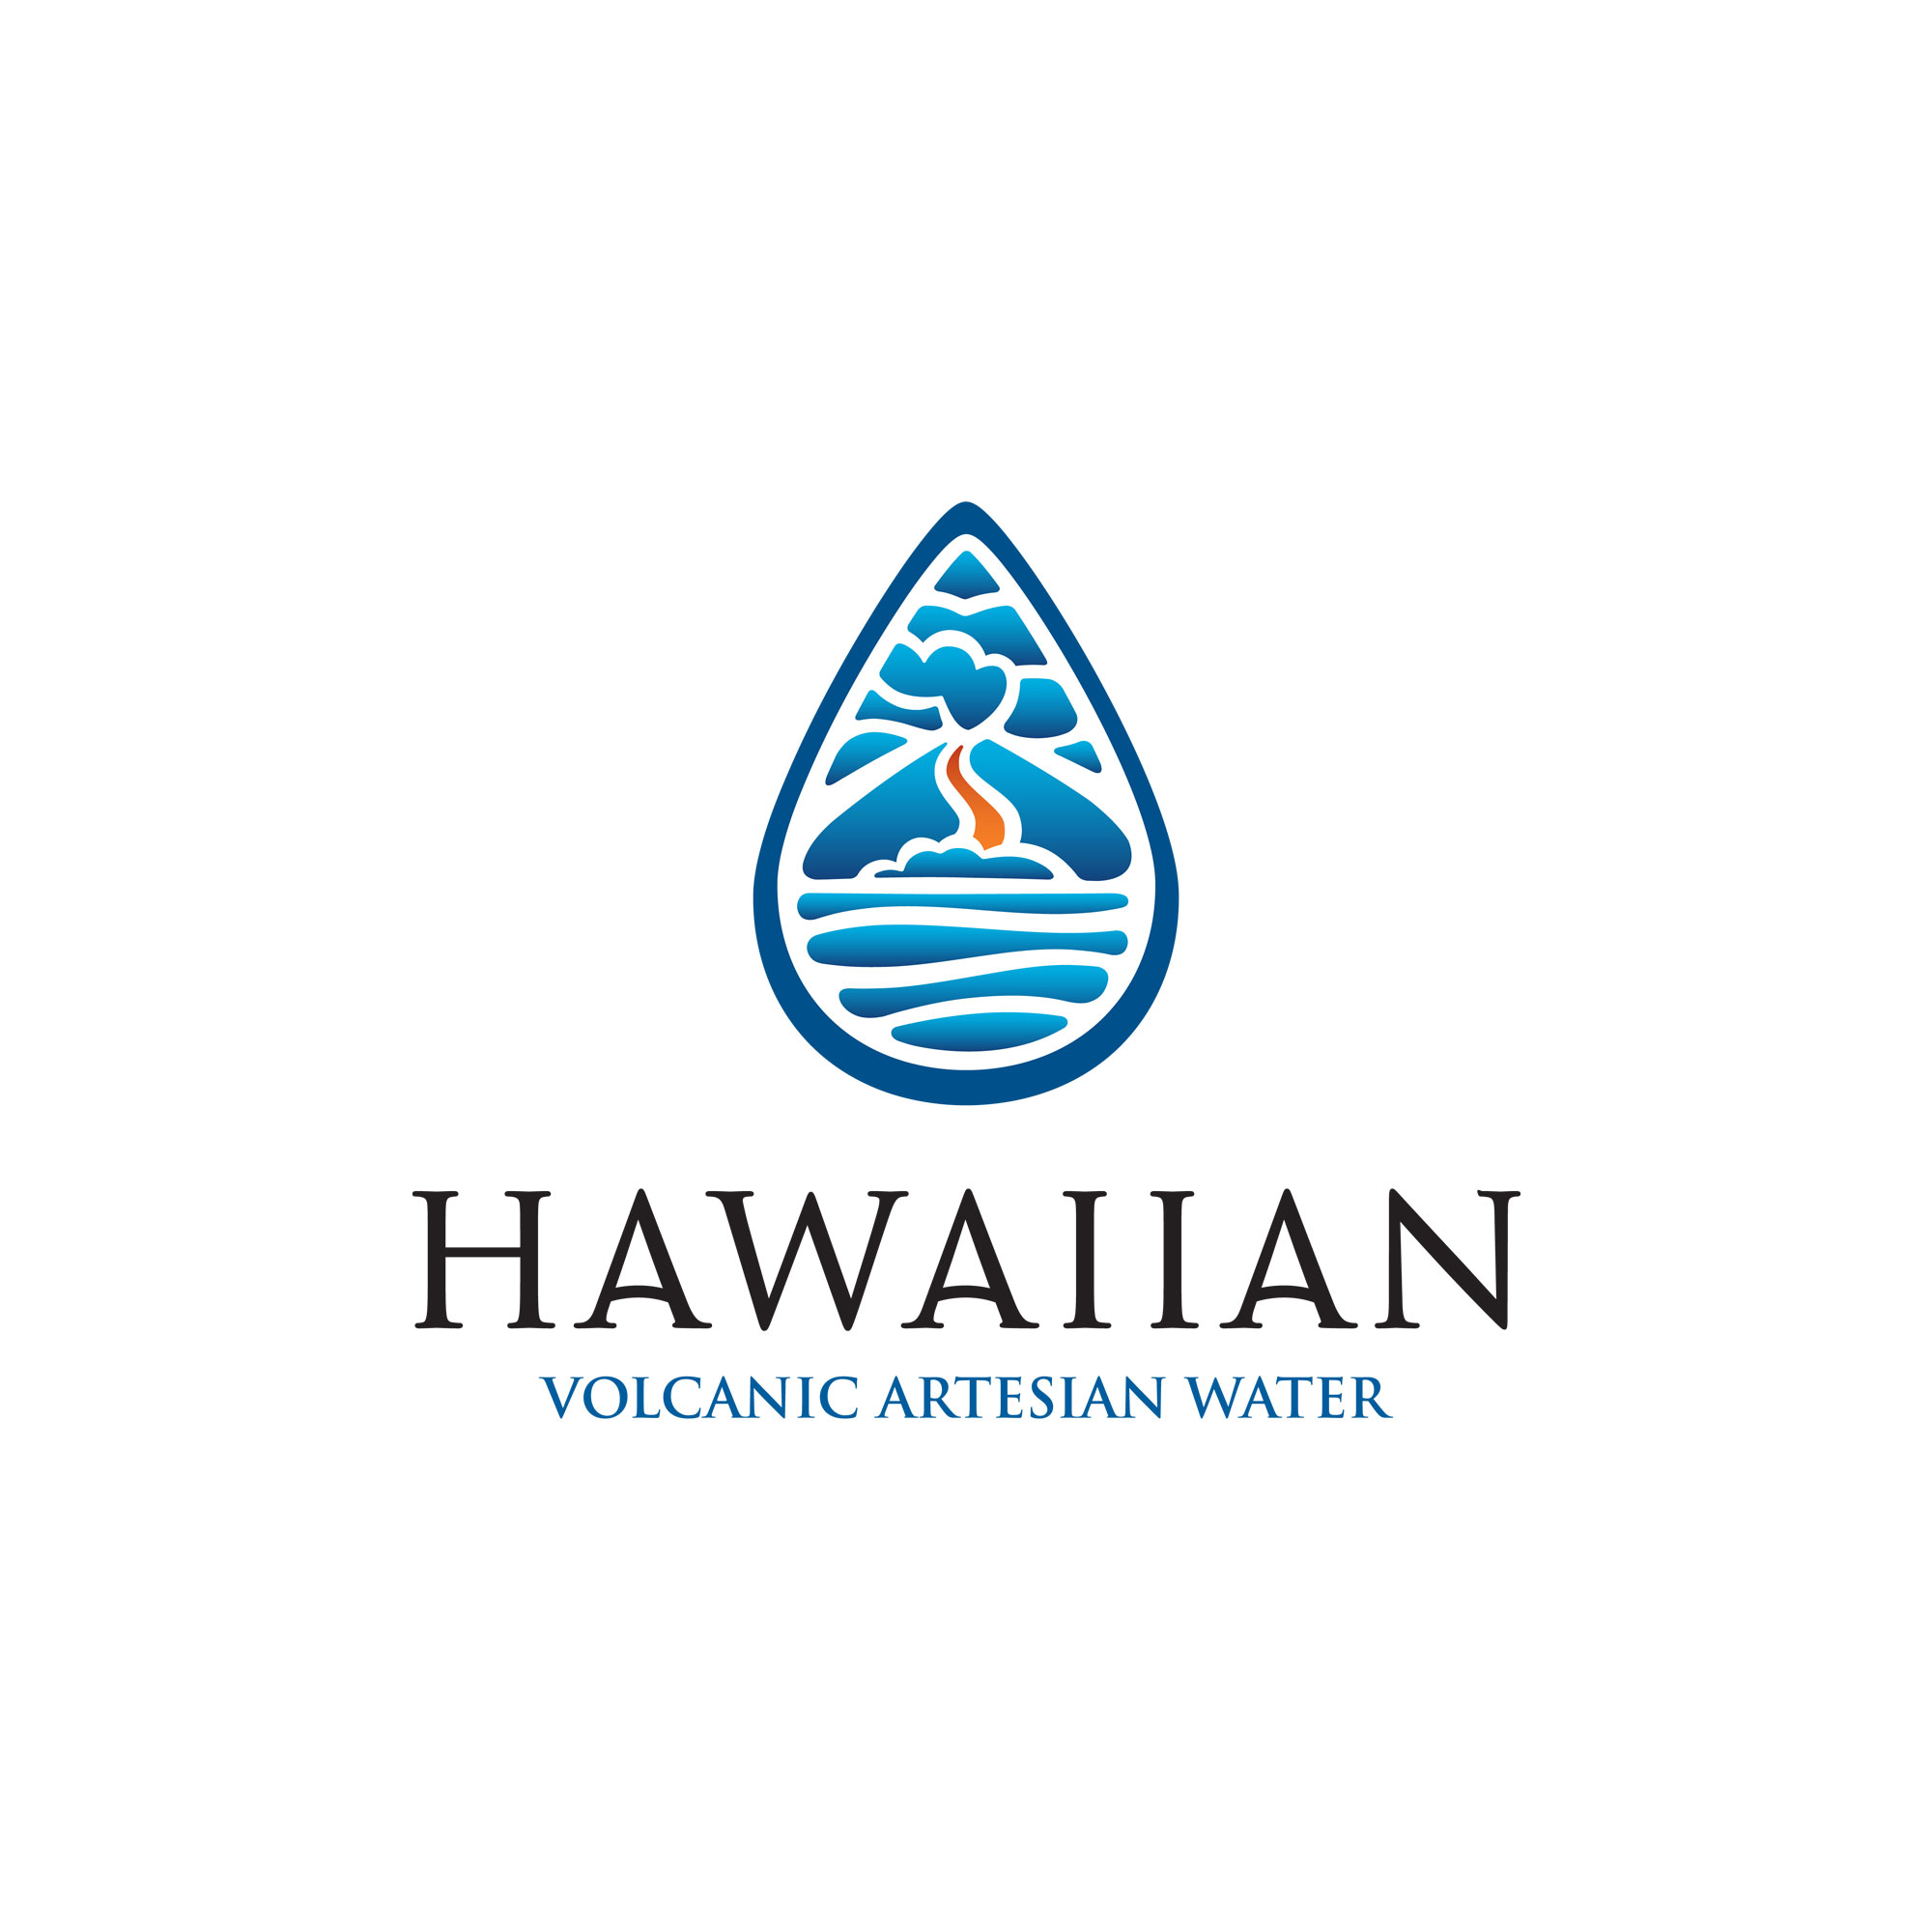 Hawaiian Volcanic Artesian Water Logo Design